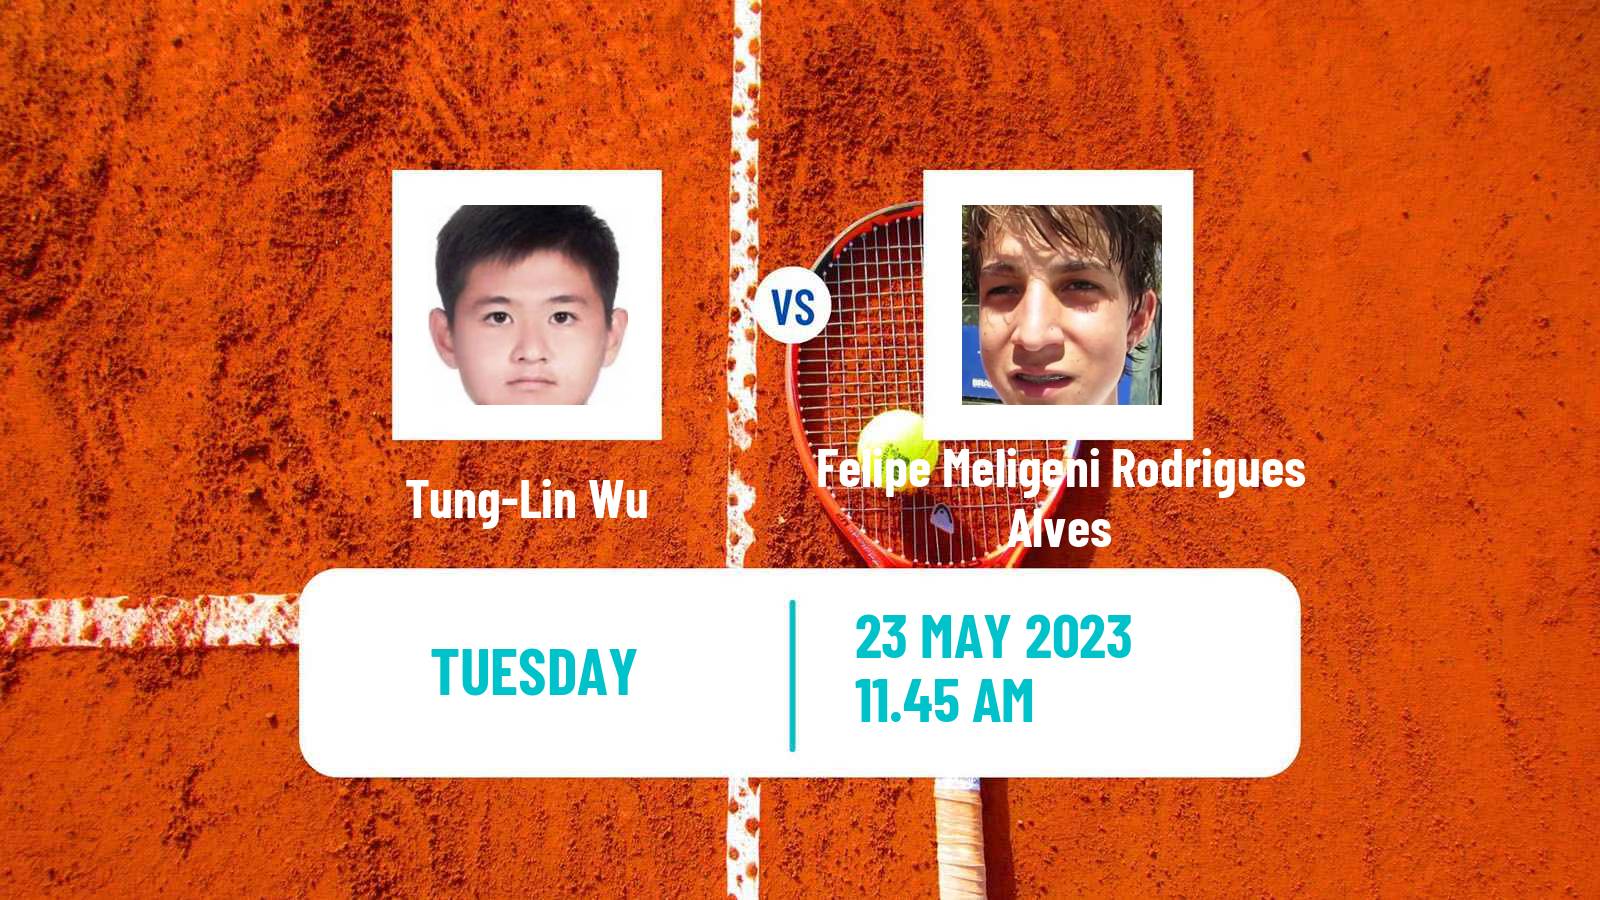 Tennis ATP Roland Garros Tung-Lin Wu - Felipe Meligeni Rodrigues Alves